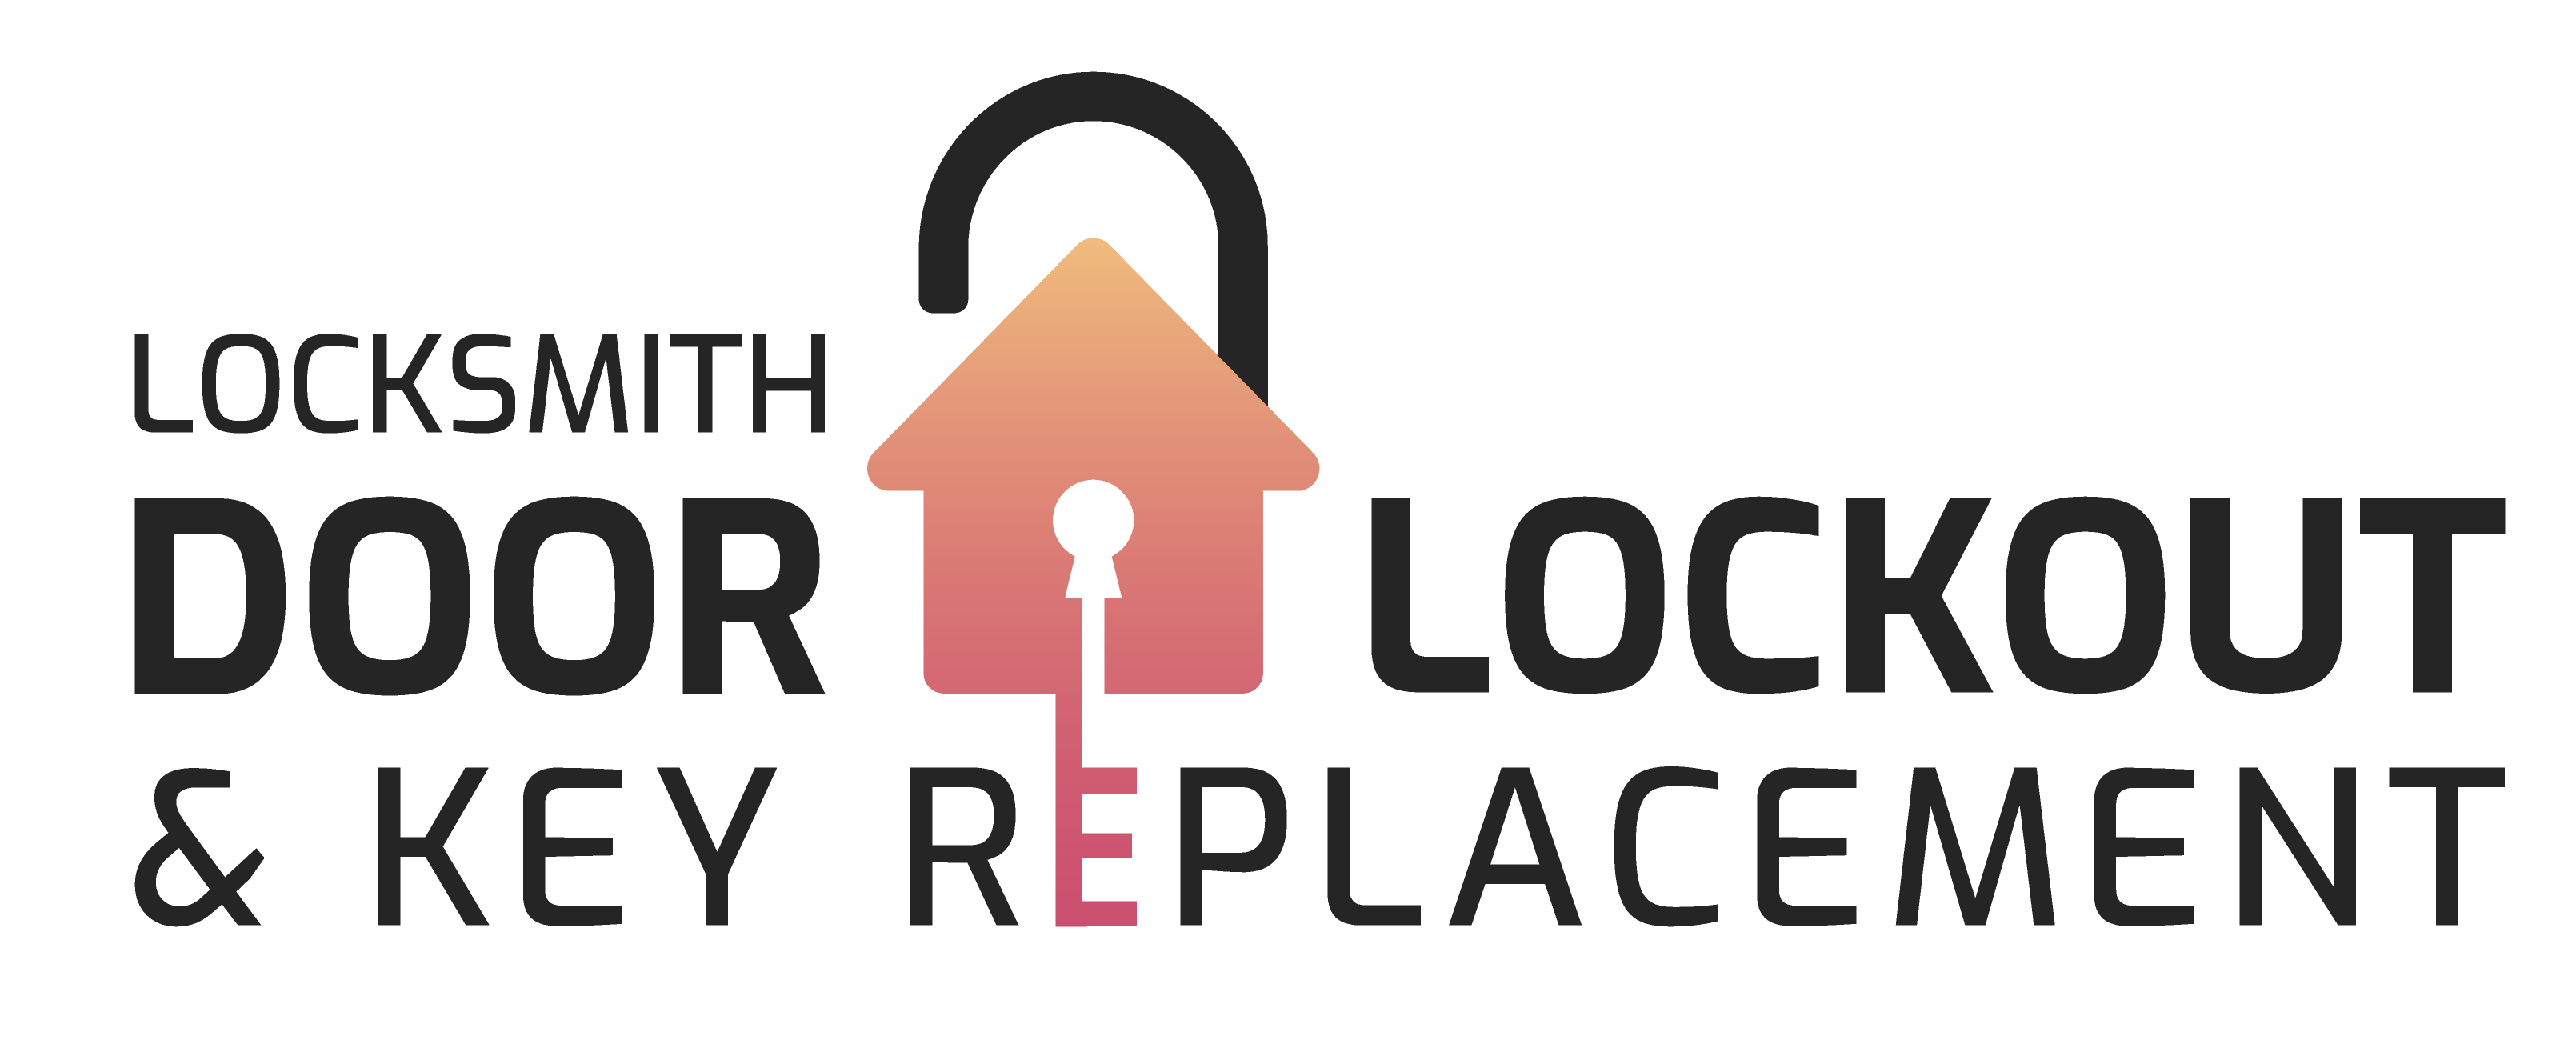 locksmith door lockout & key replacement